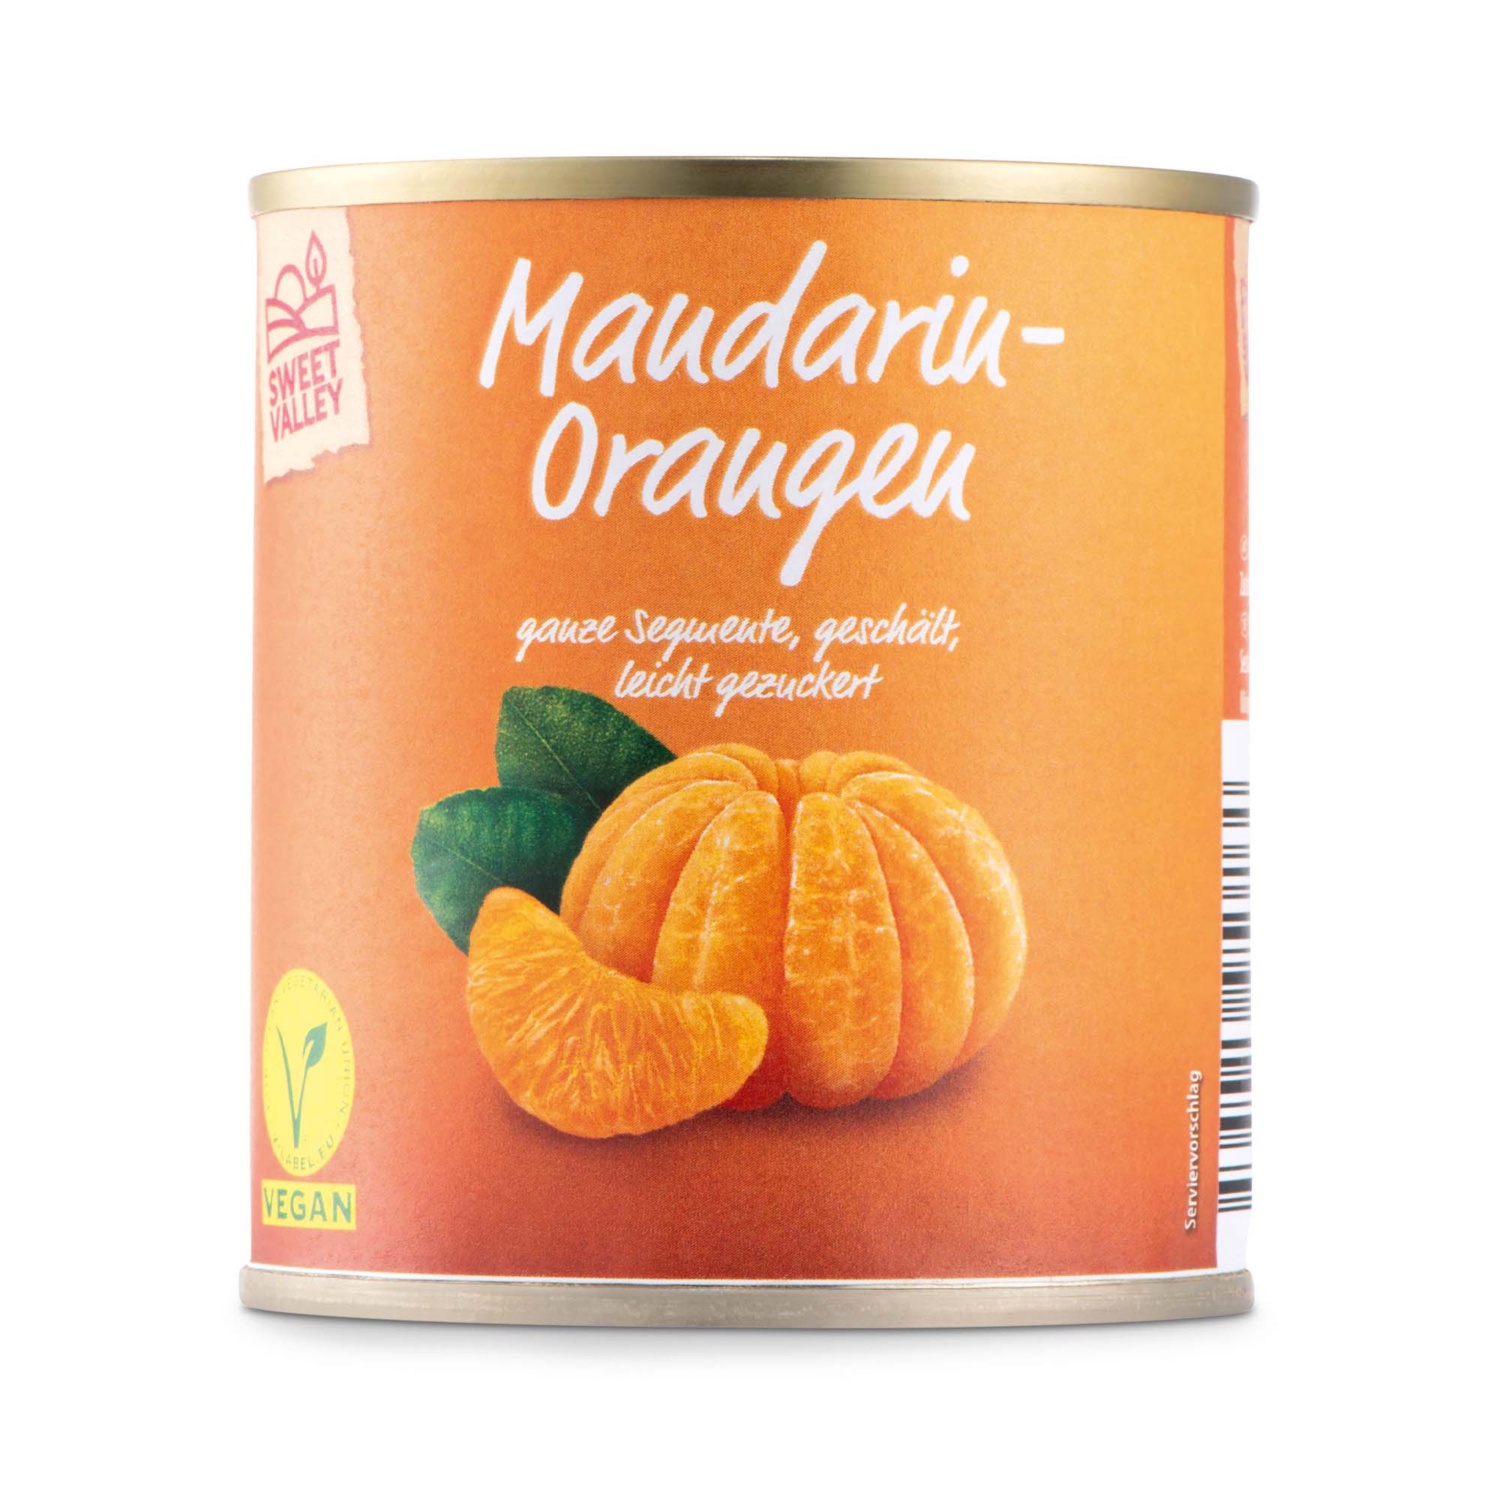 SWEET VALLEY Mandarine